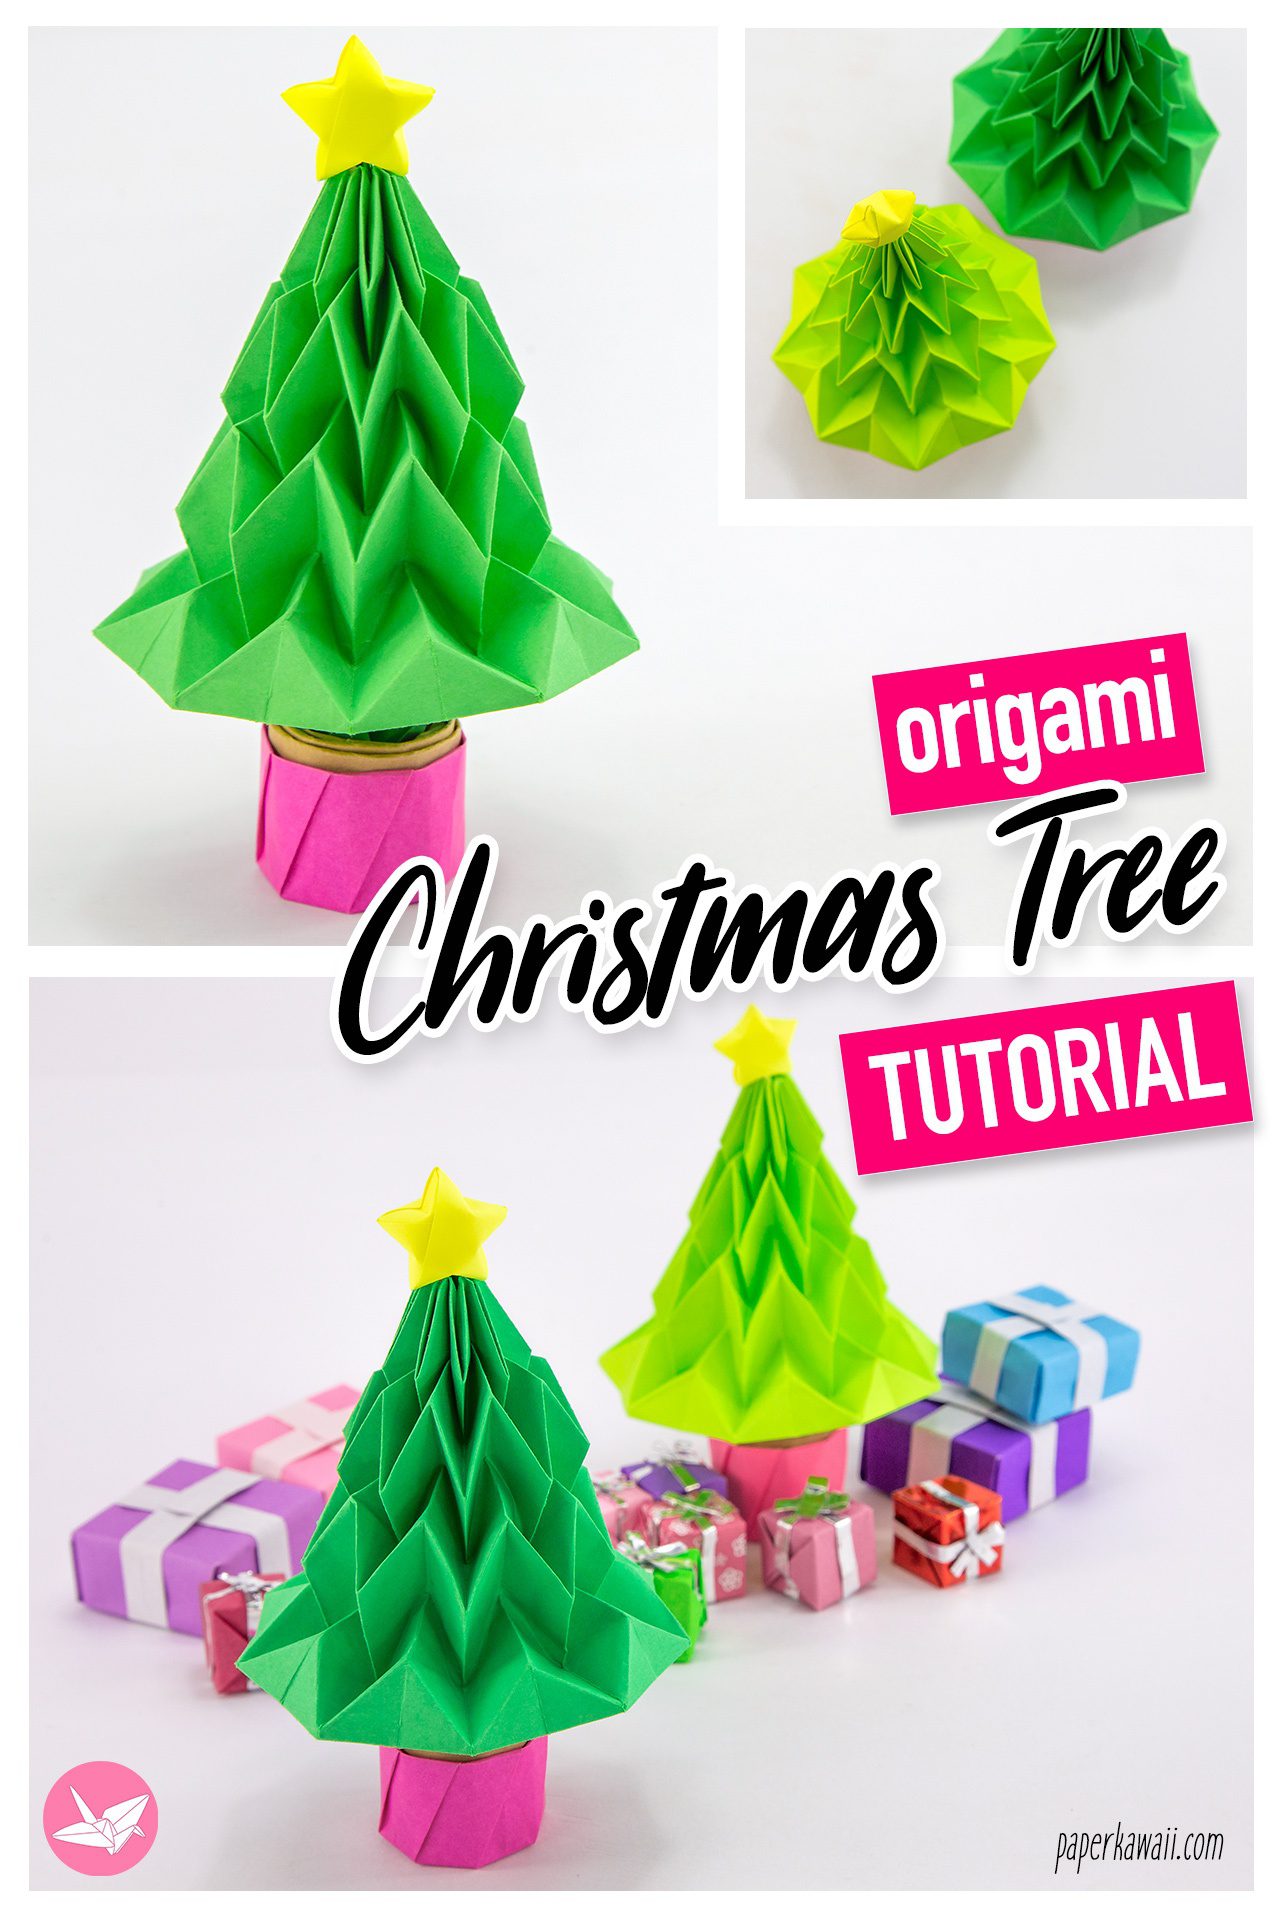 How To Make A 3D Origami Christmas Tree - Paper Kawaii